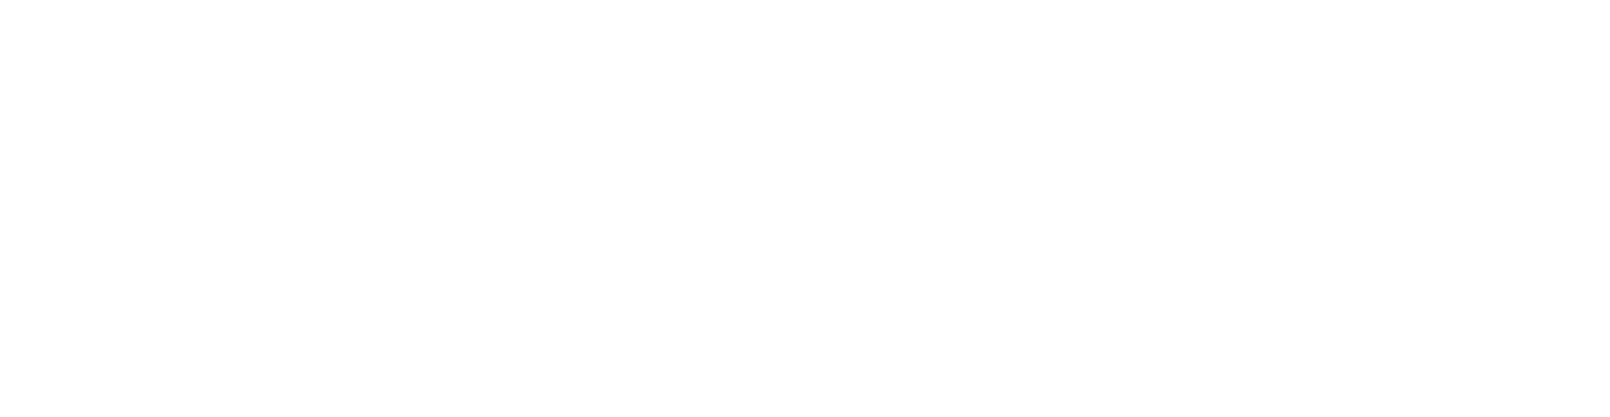 Southwestern Law School, Los Angeles